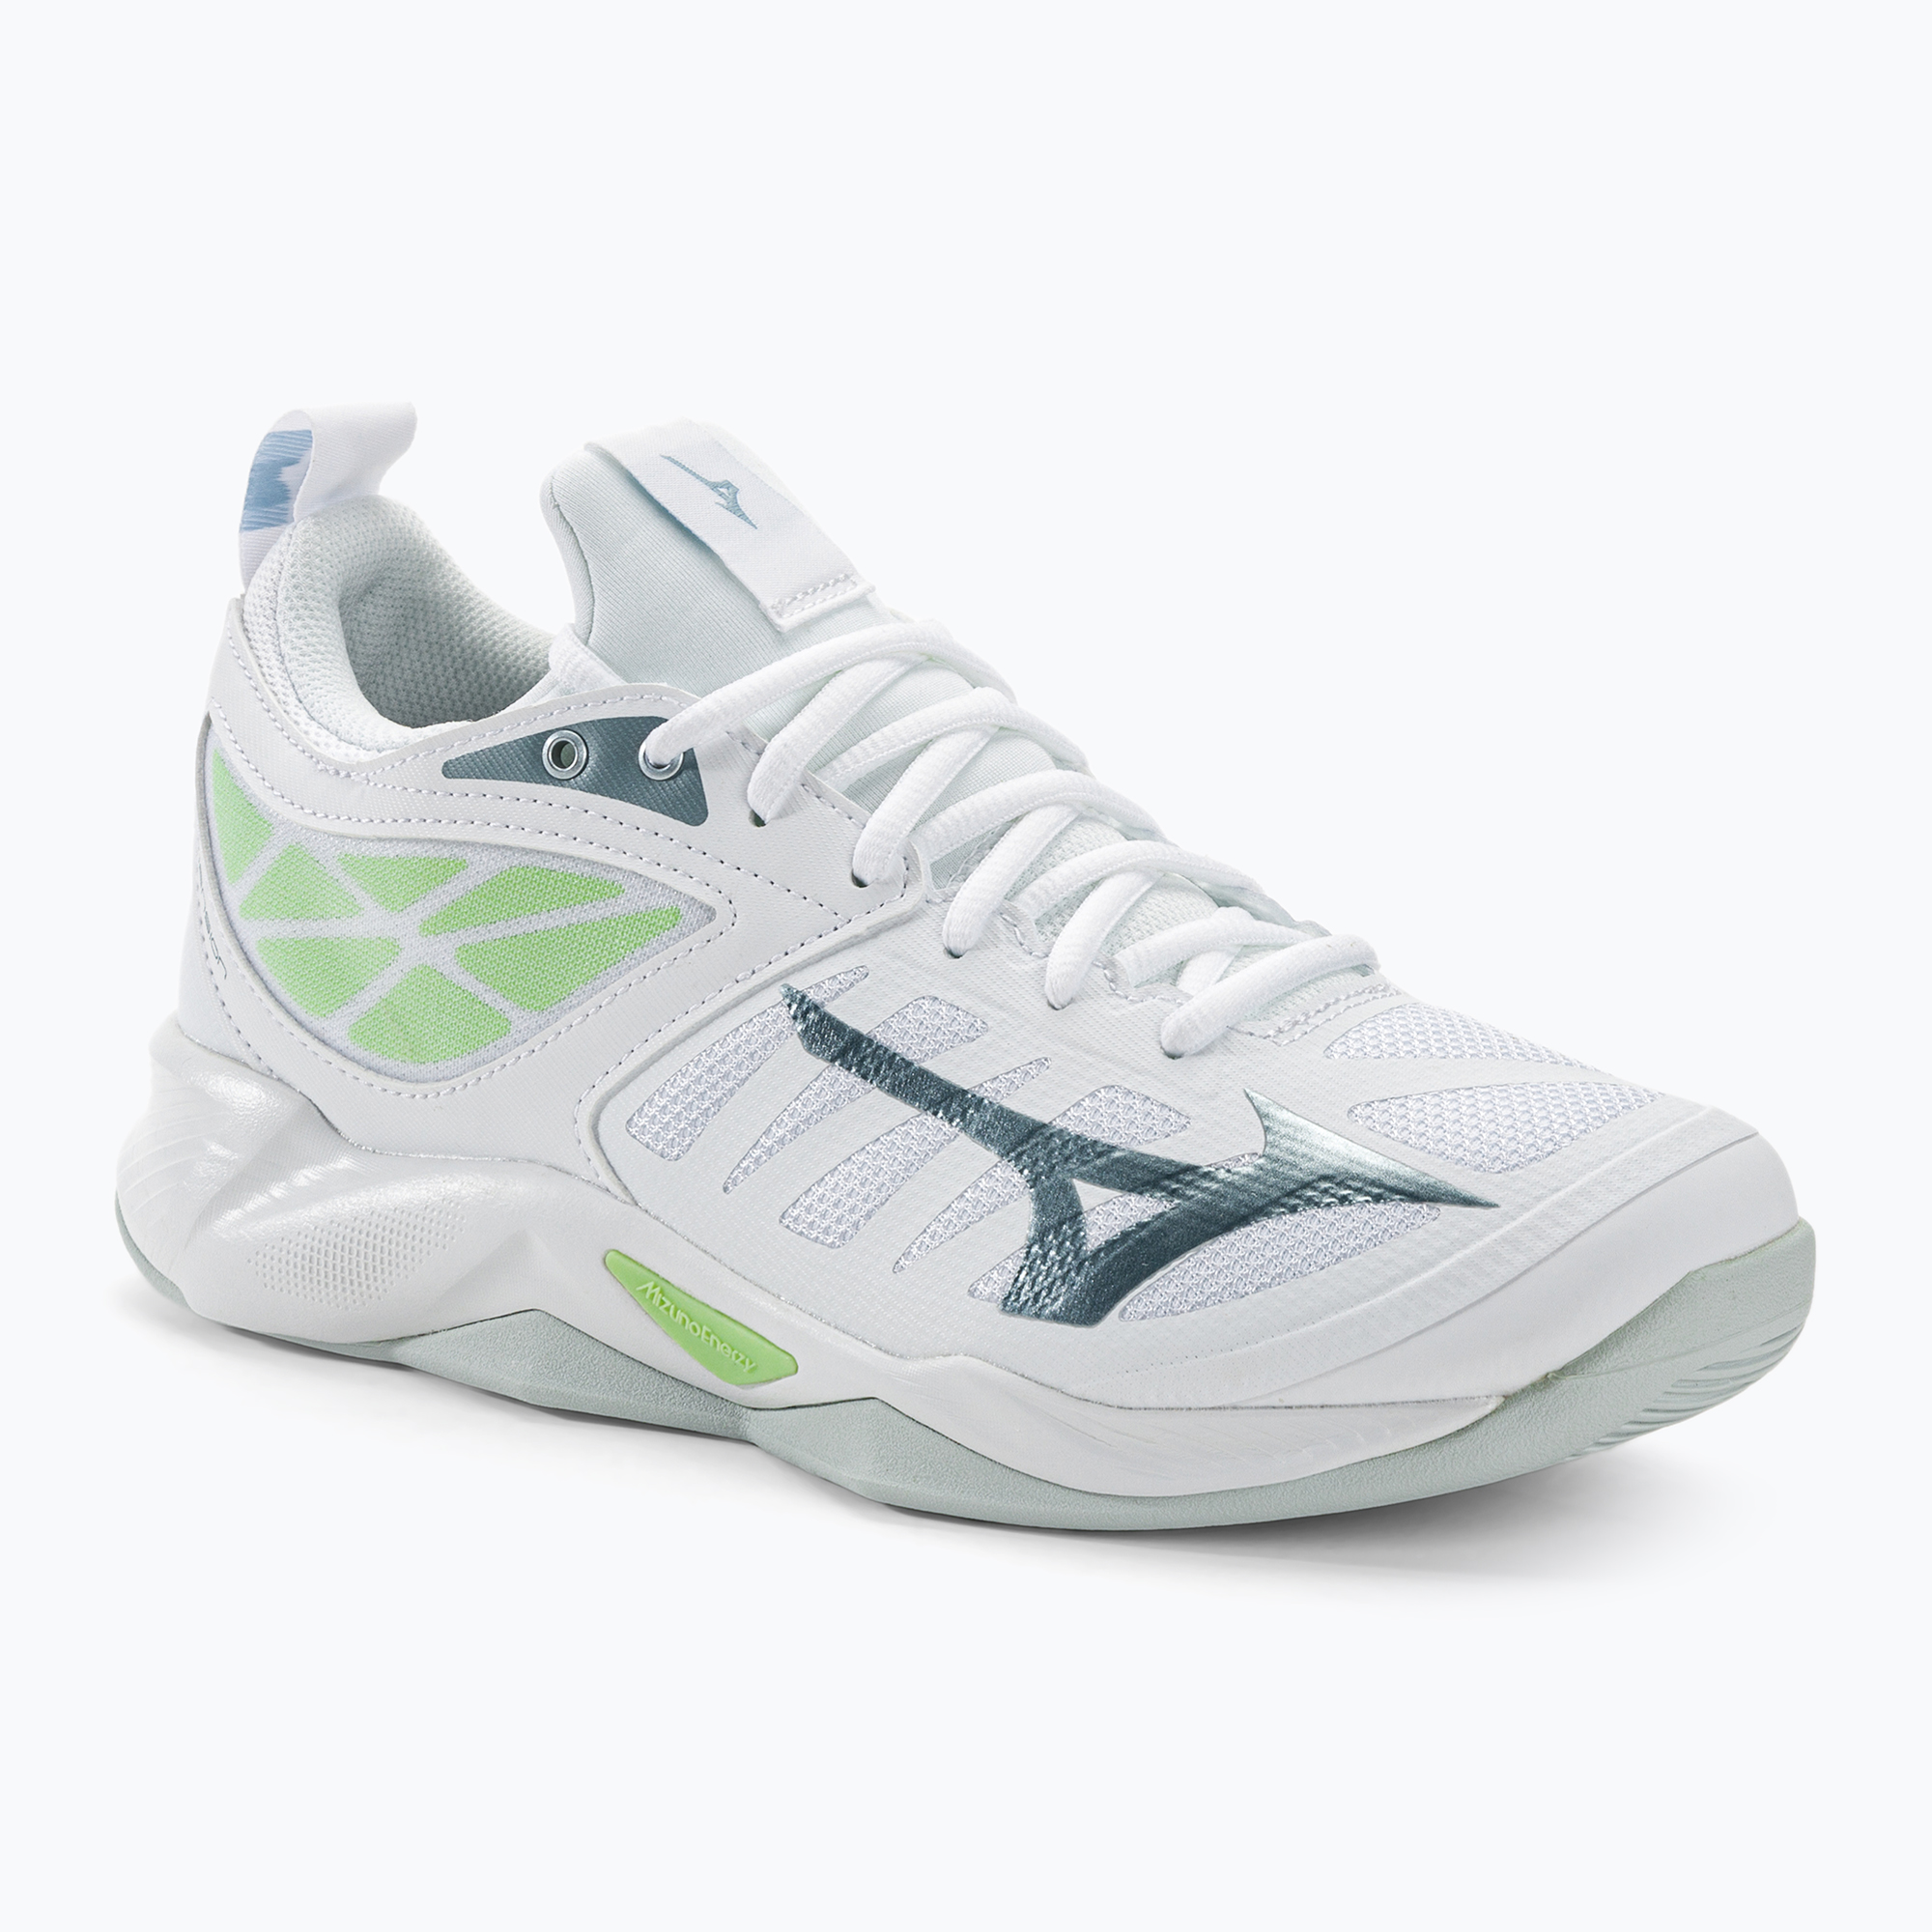 Dámska volejbalová obuv Mizuno Wave Dimension white / g ridge / patina green